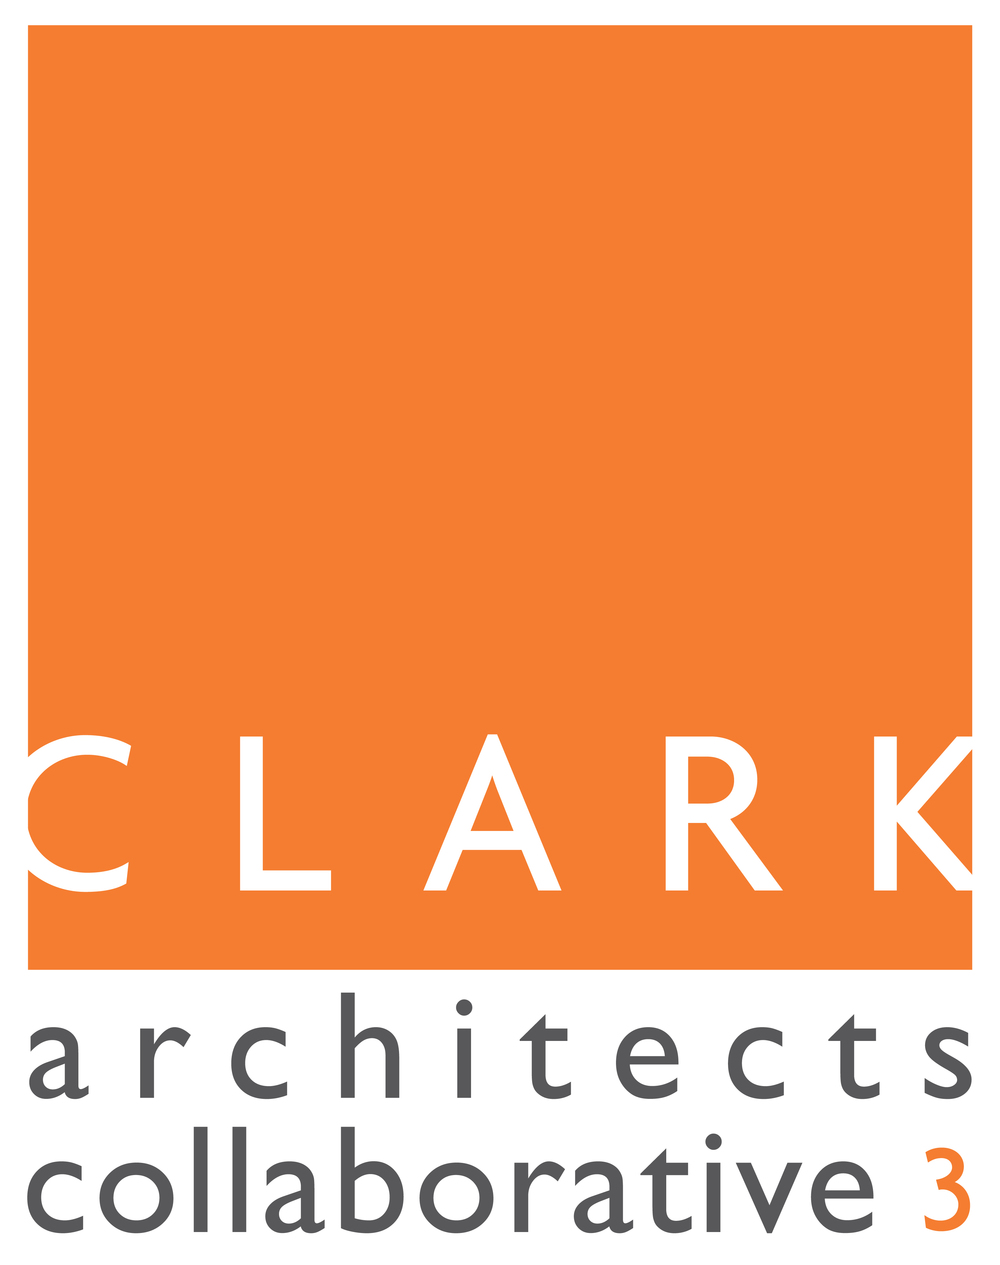 Clark Architects Collaborative 3